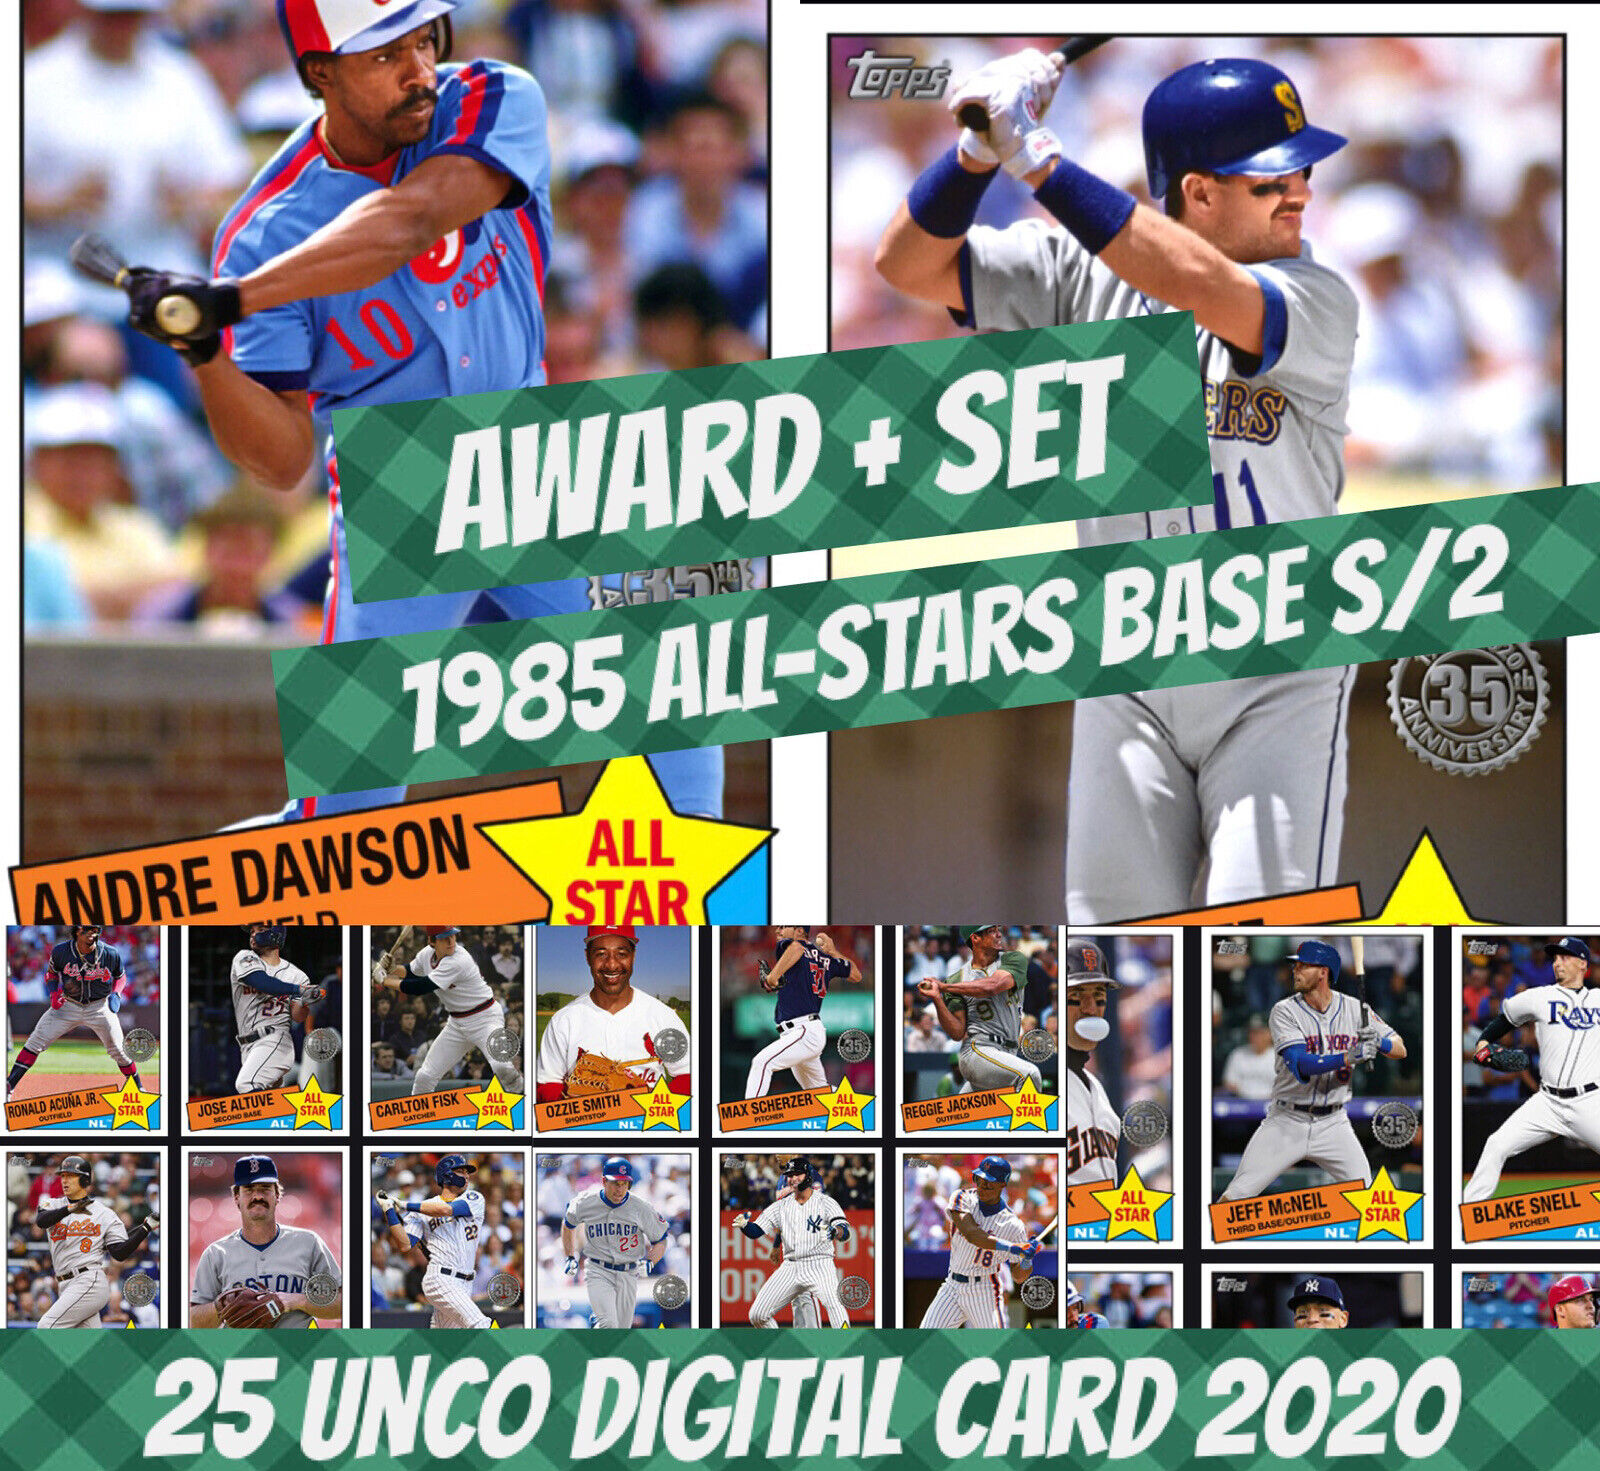 2020 Topps Bunt Andre Dawson Unco Award + Set (1+24) 1985 All-Stars S/2 Digital